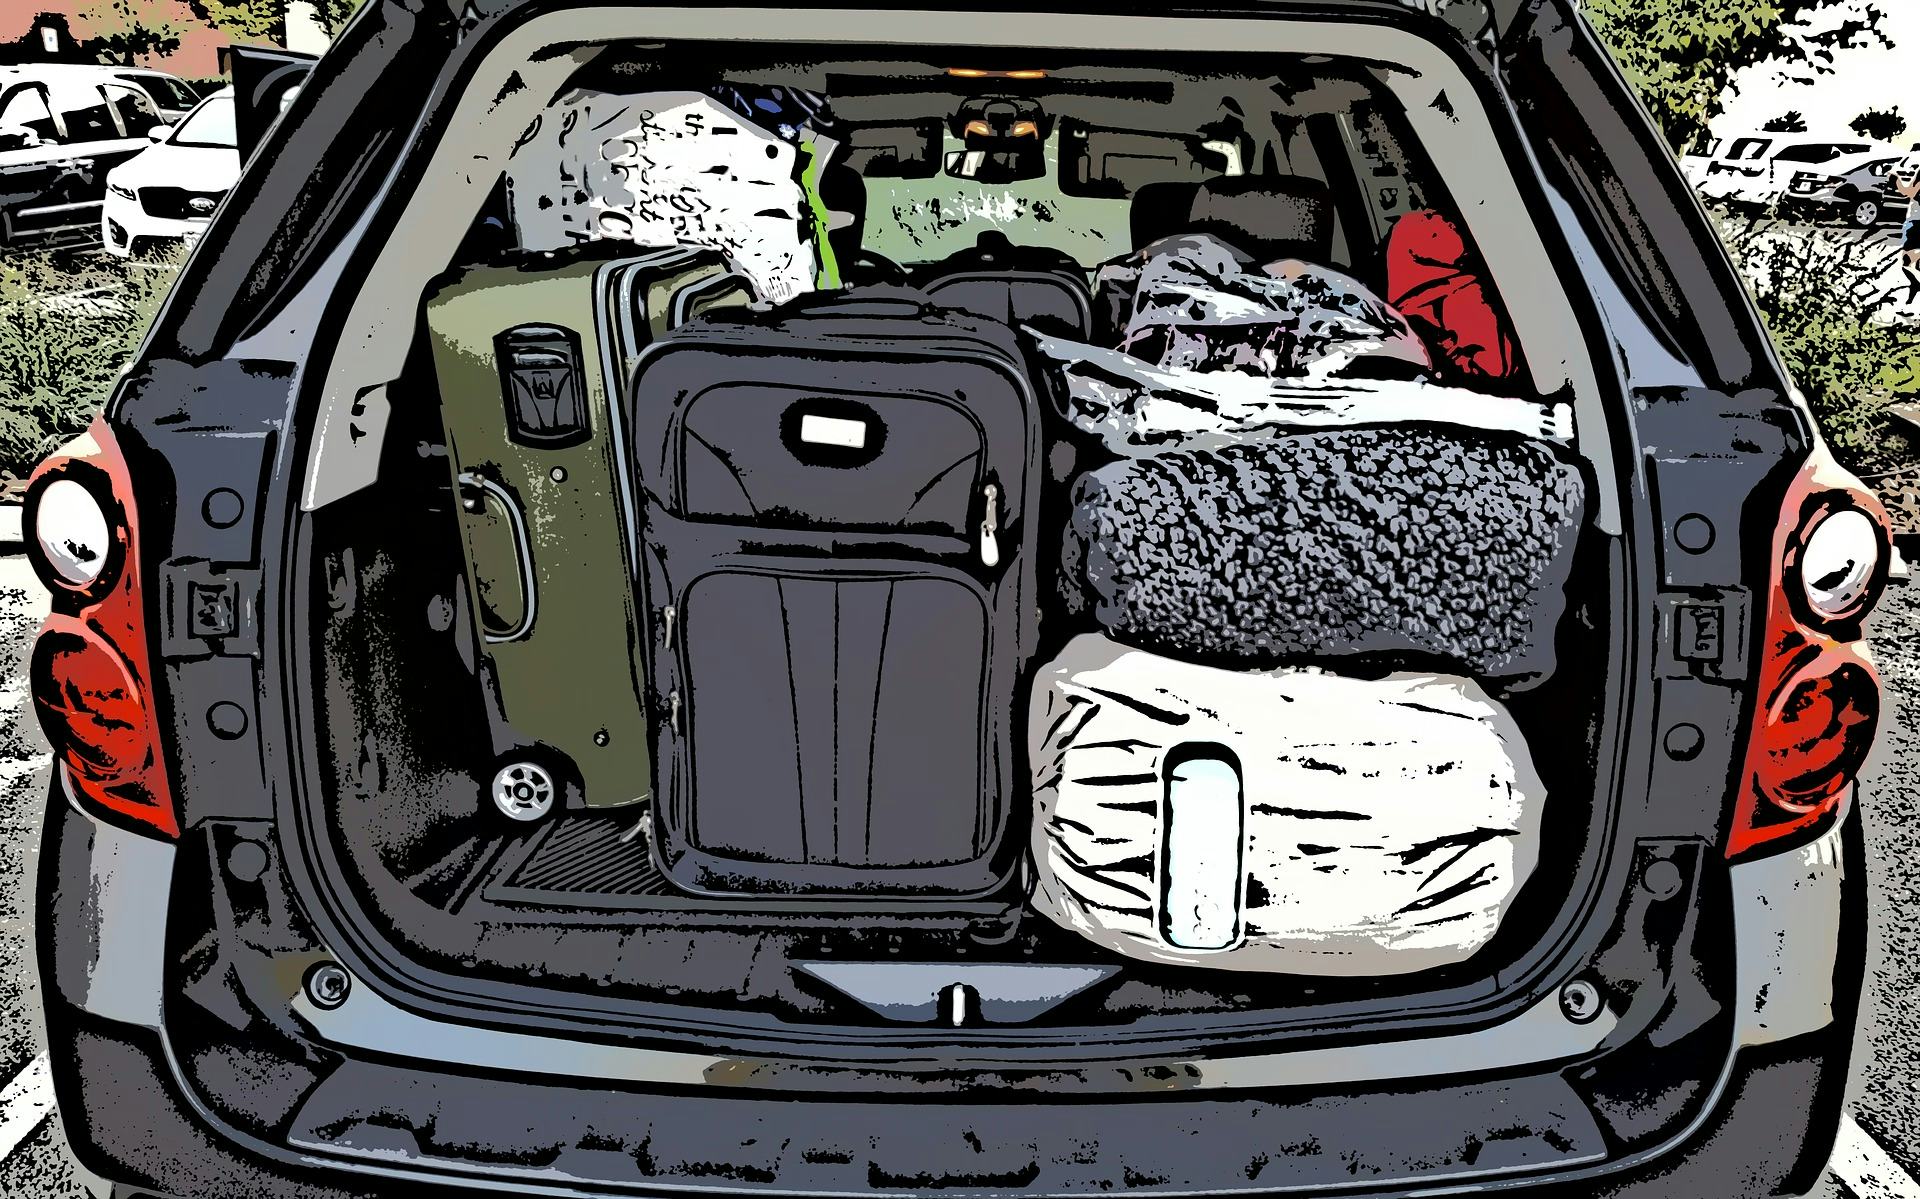 Kampeerder op doorreis moet alle bagage naar hotelkamer meenemen